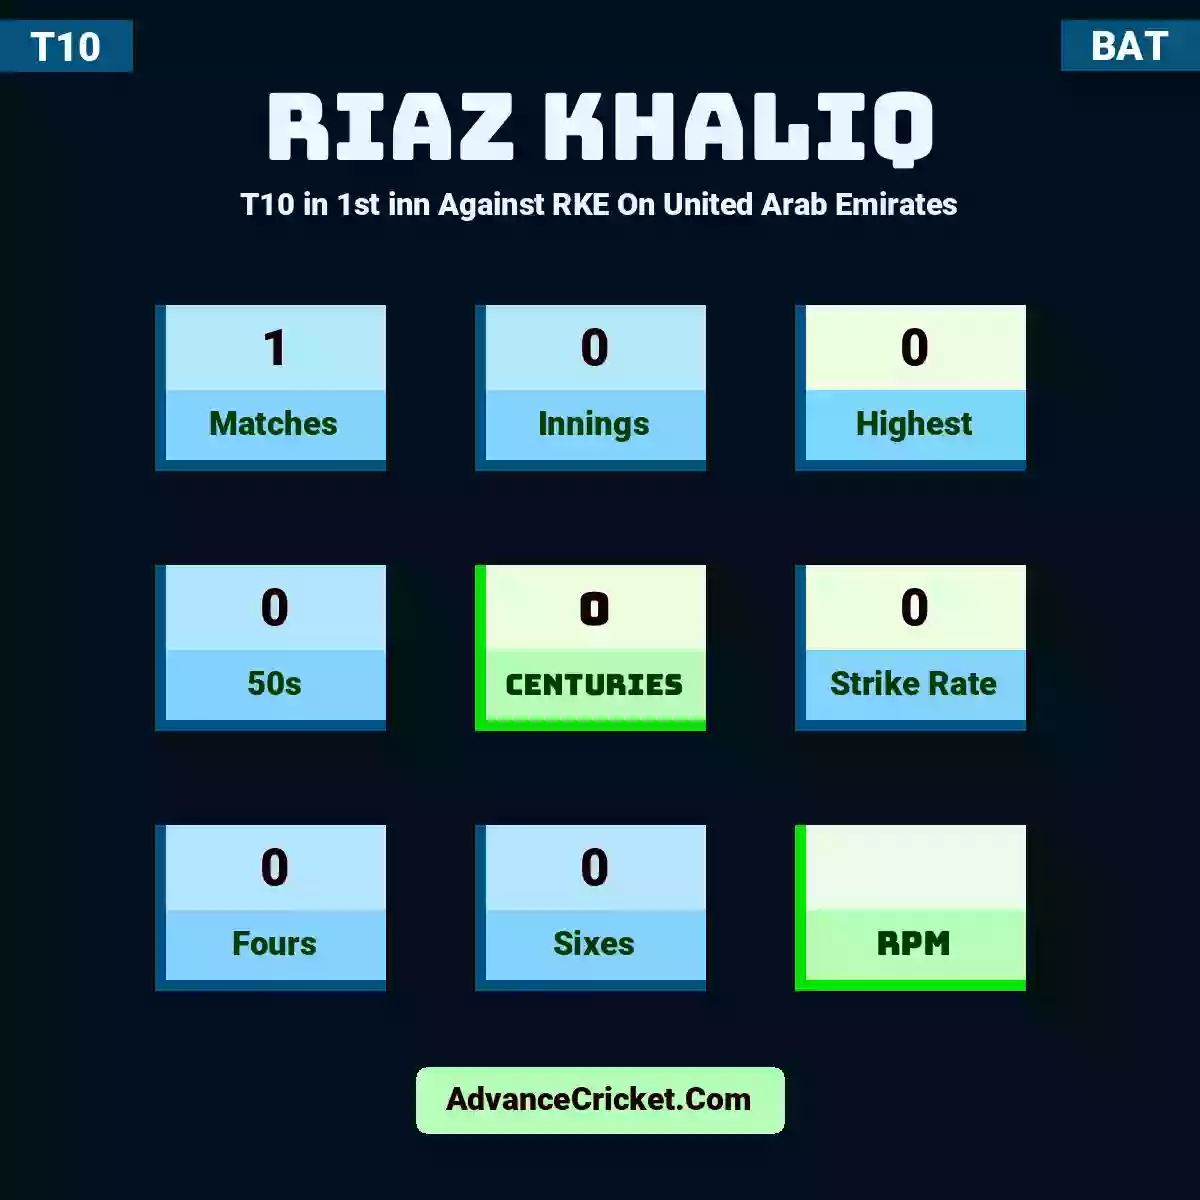 Riaz Khaliq T10  in 1st inn Against RKE On United Arab Emirates, Riaz Khaliq played 1 matches, scored 0 runs as highest, 0 half-centuries, and 0 centuries, with a strike rate of 0. R.Khaliq hit 0 fours and 0 sixes.